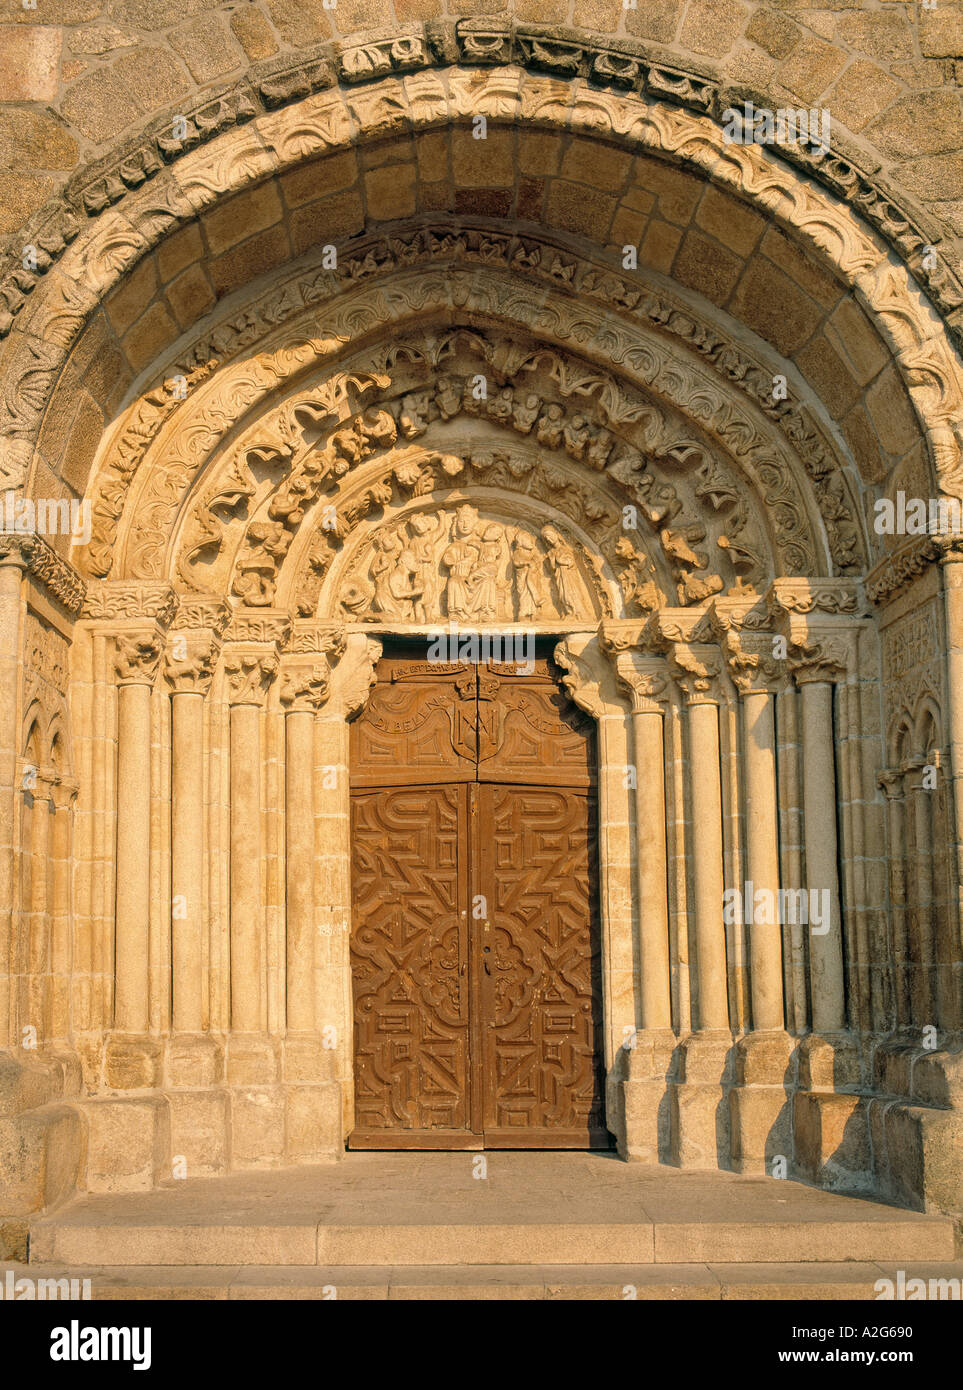 Betanzos La Coruña Province Spain Portal of Romanesque Gothic church of Santa Maria del Azogue Stock Photo